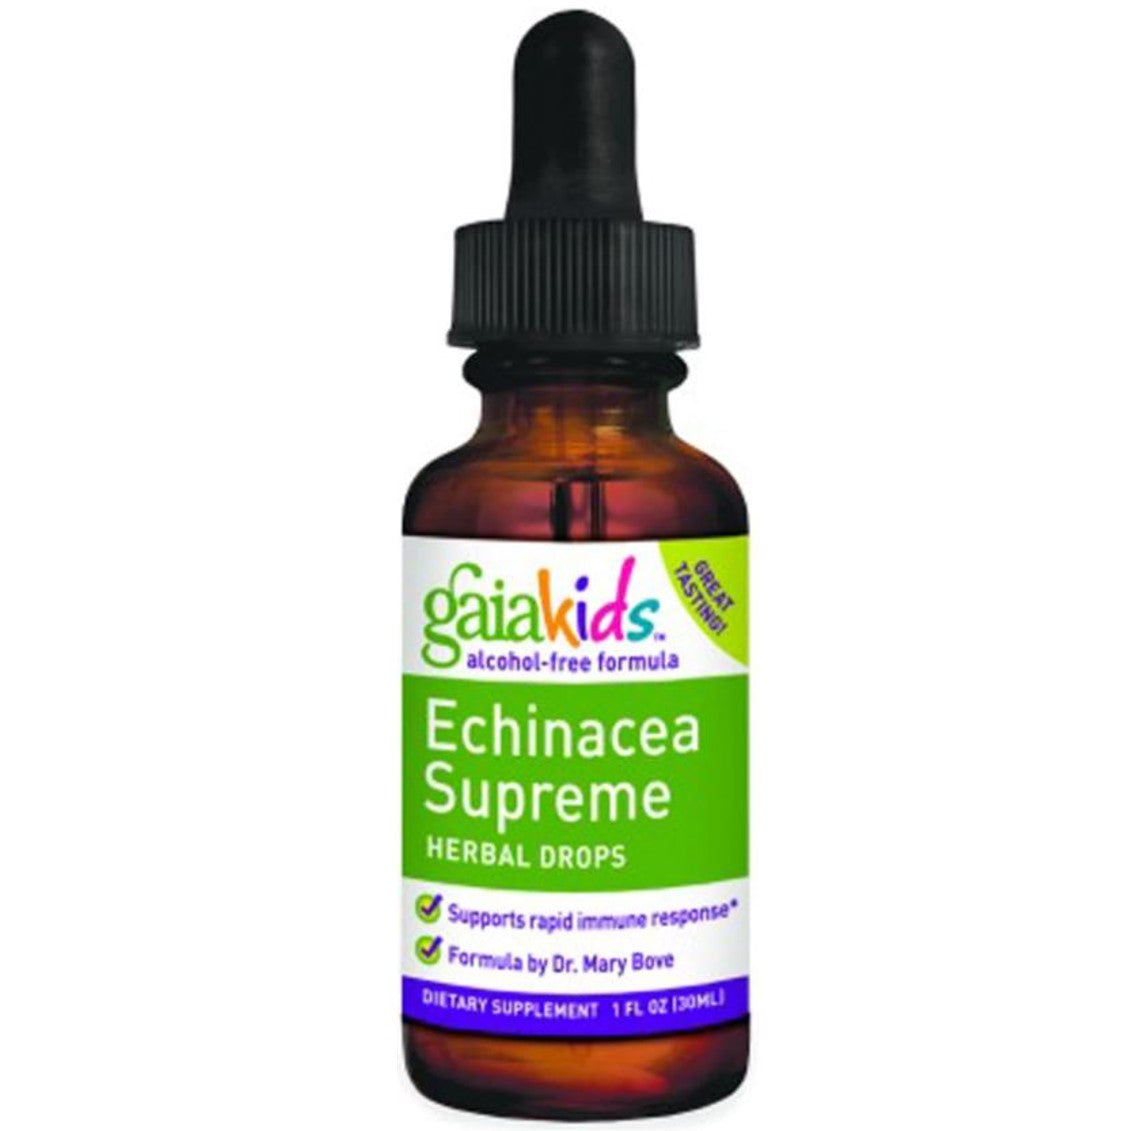 Gaia Kids Echinacea Supreme Herbal Drops, 60 ml.-NaturesWisdom